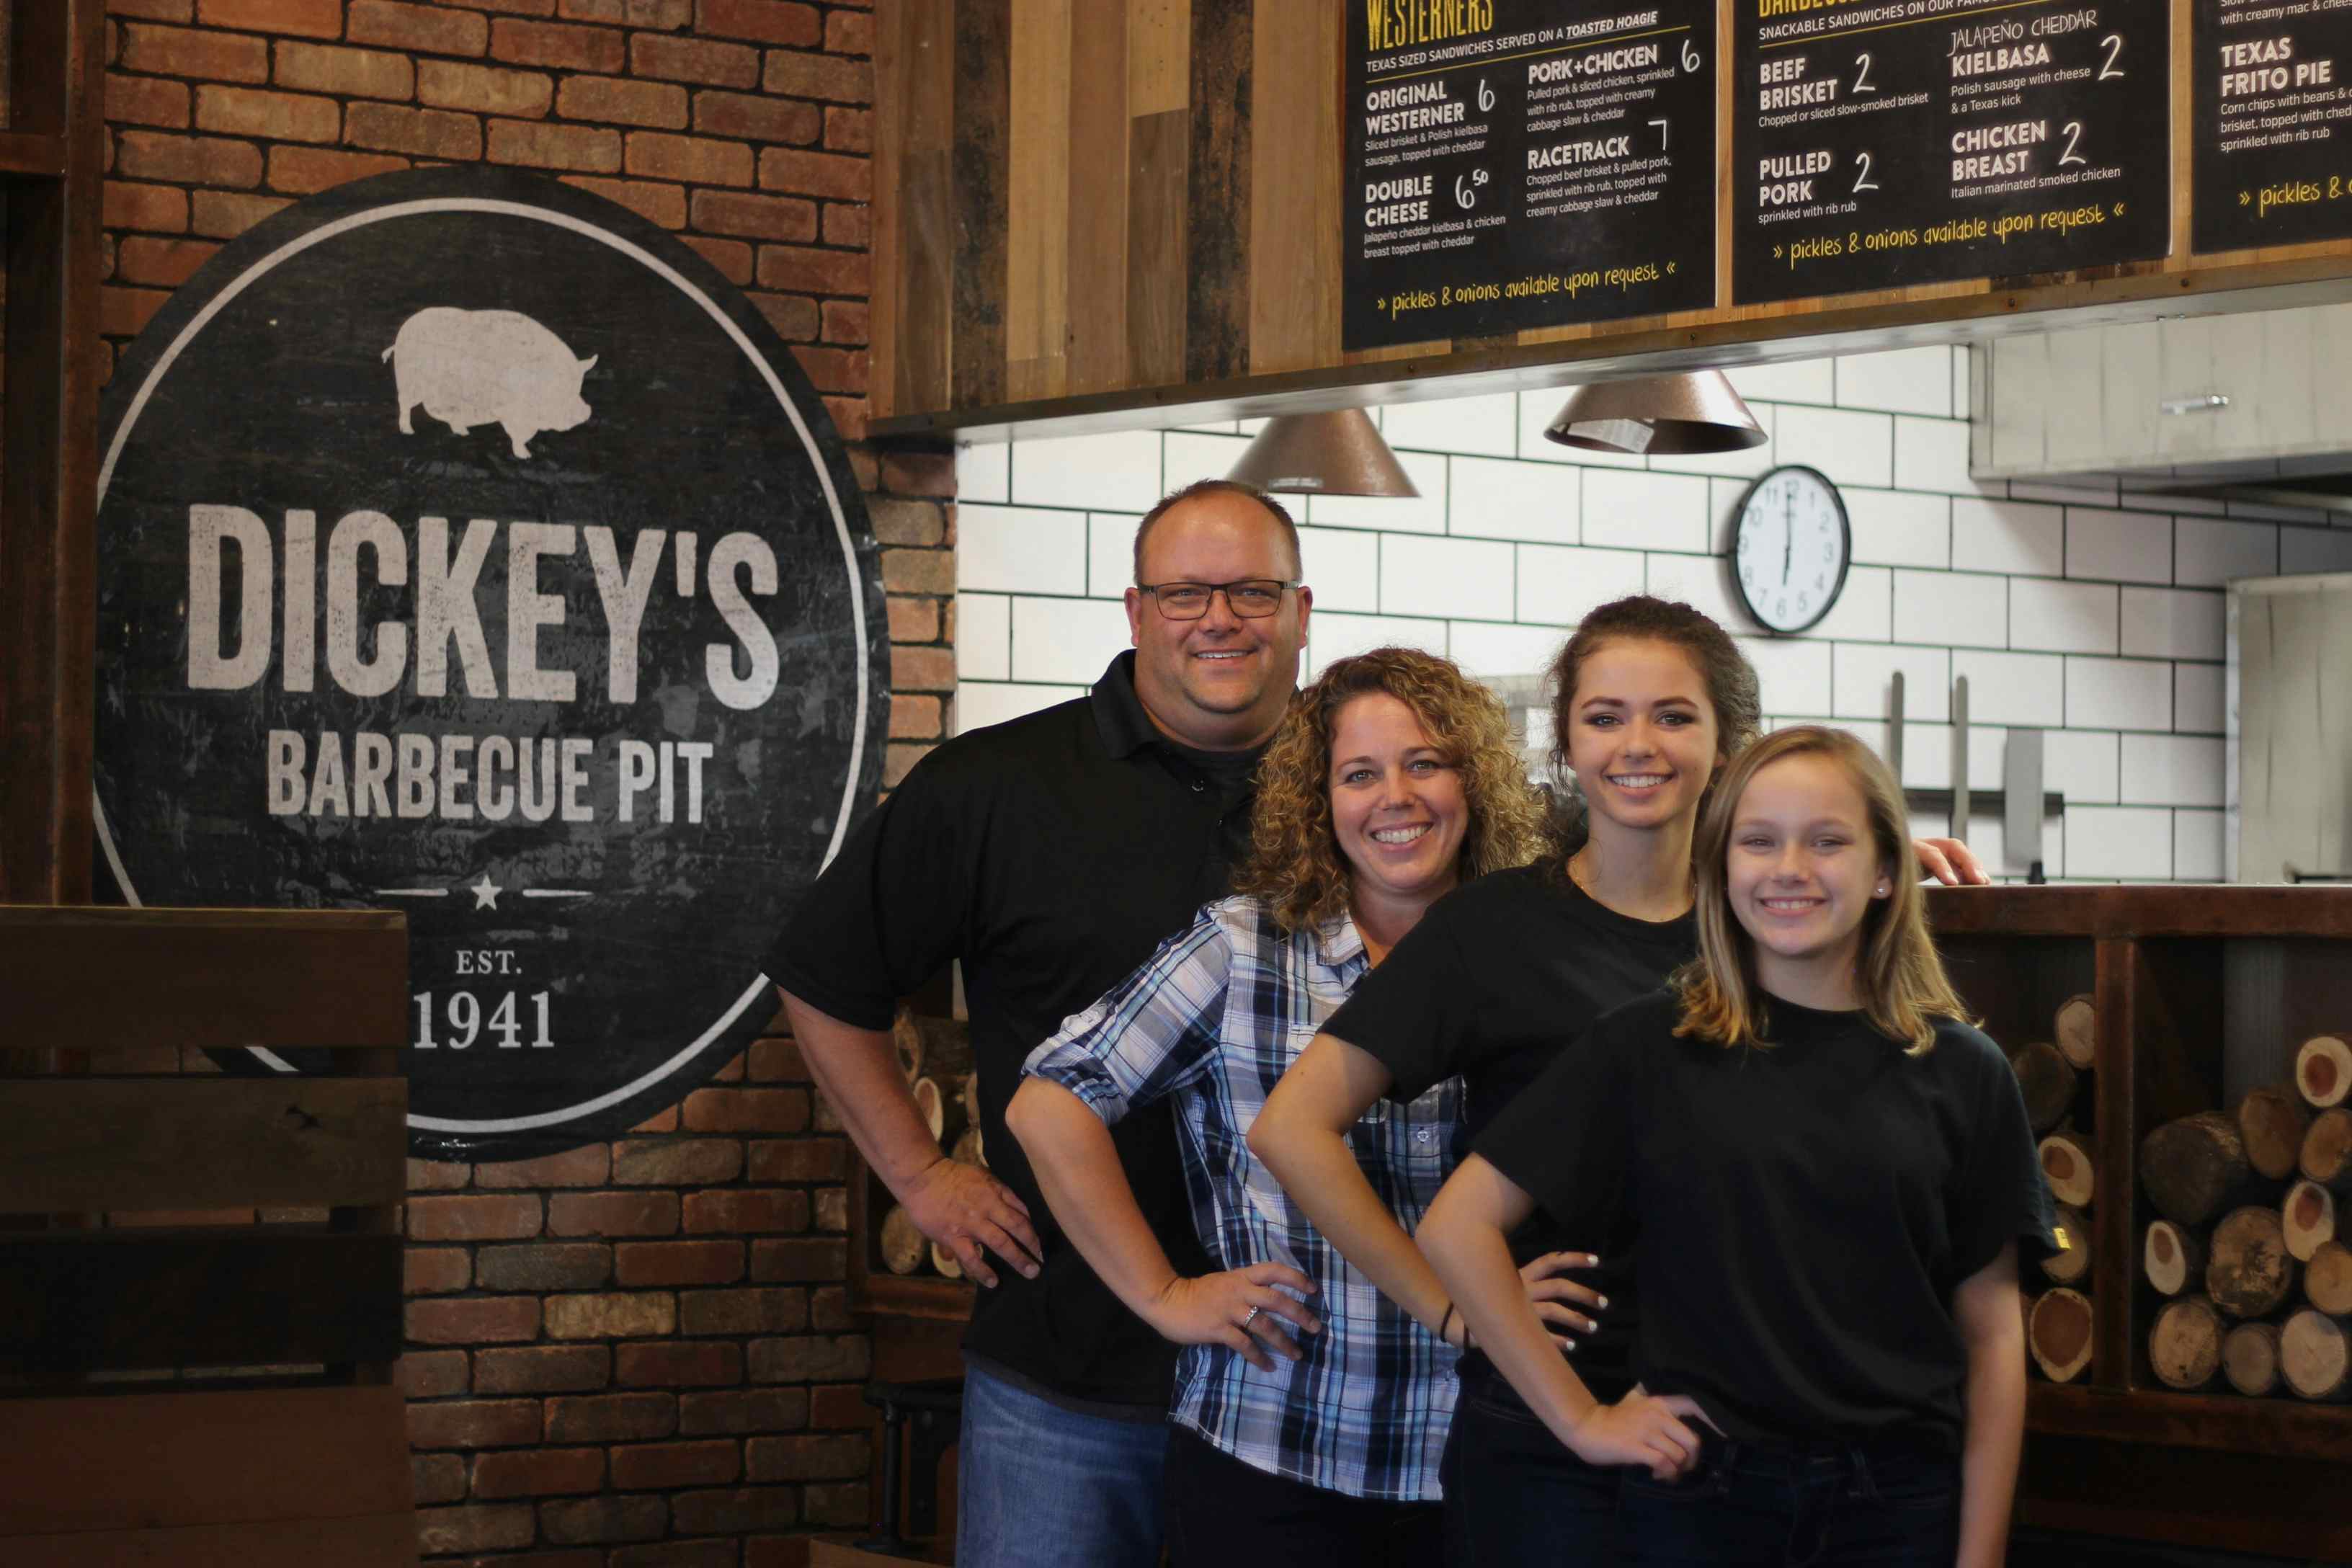 Bradenton Herald: Dickey’s Barbecue Pit opens Thursday in Bradenton